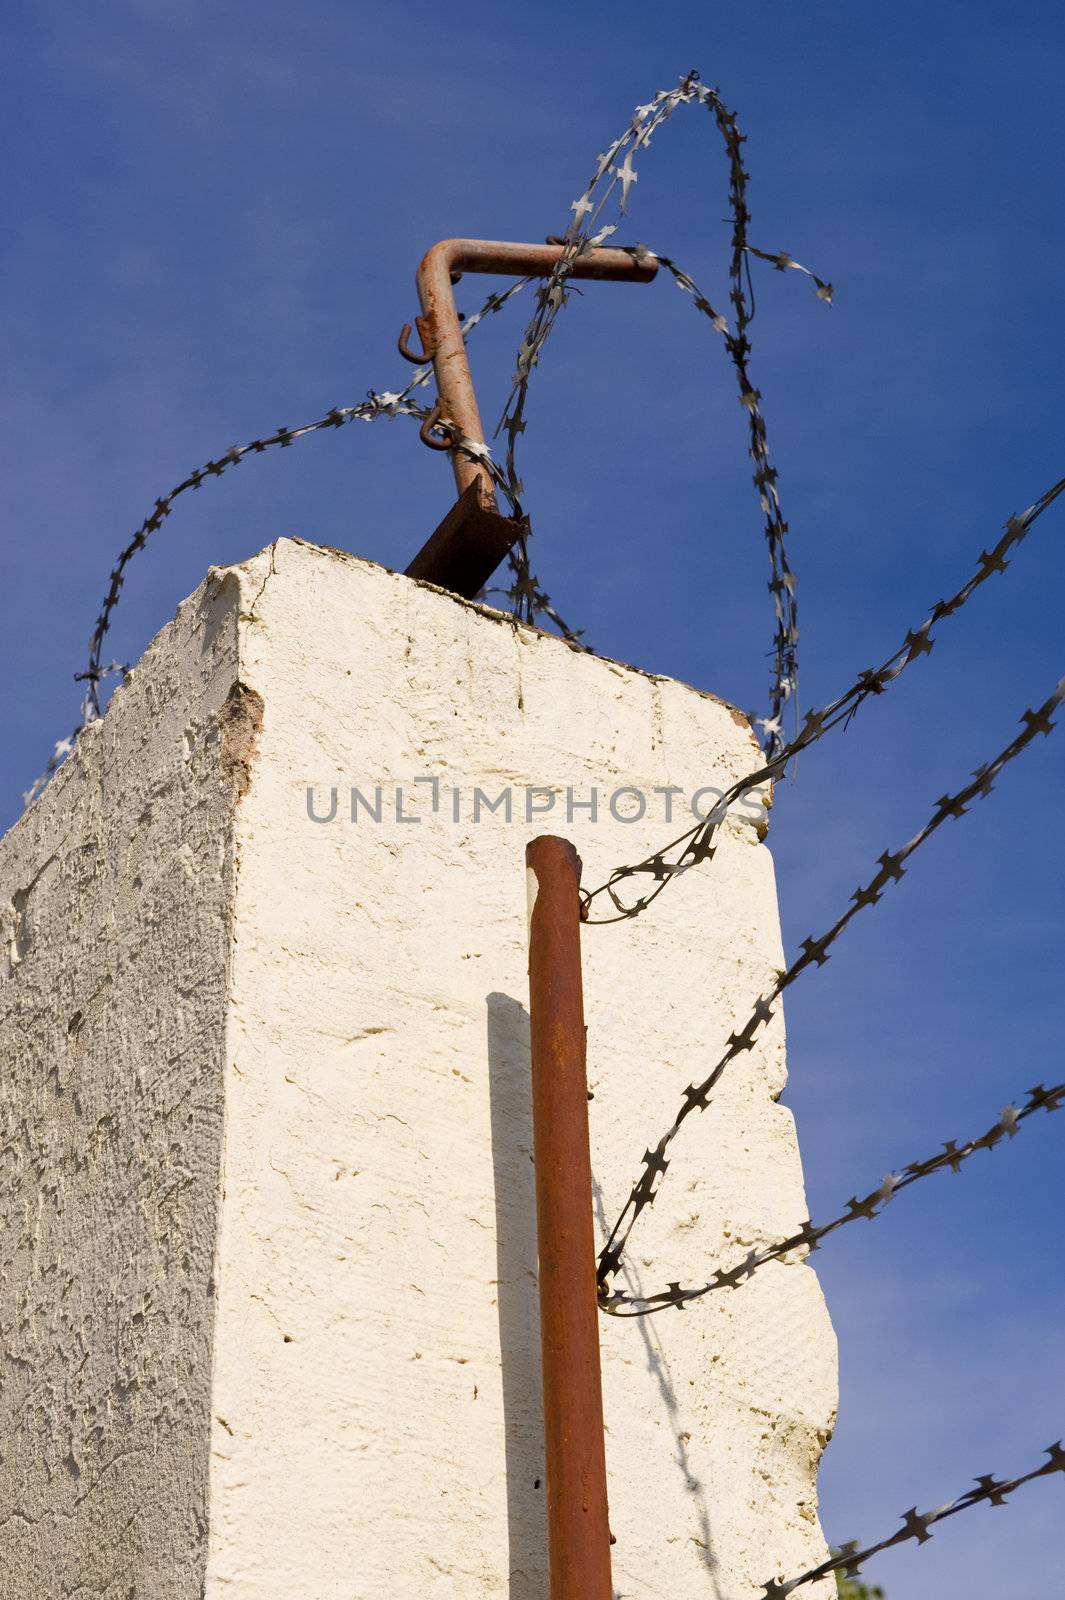 Prison barbed wire by Alenmax